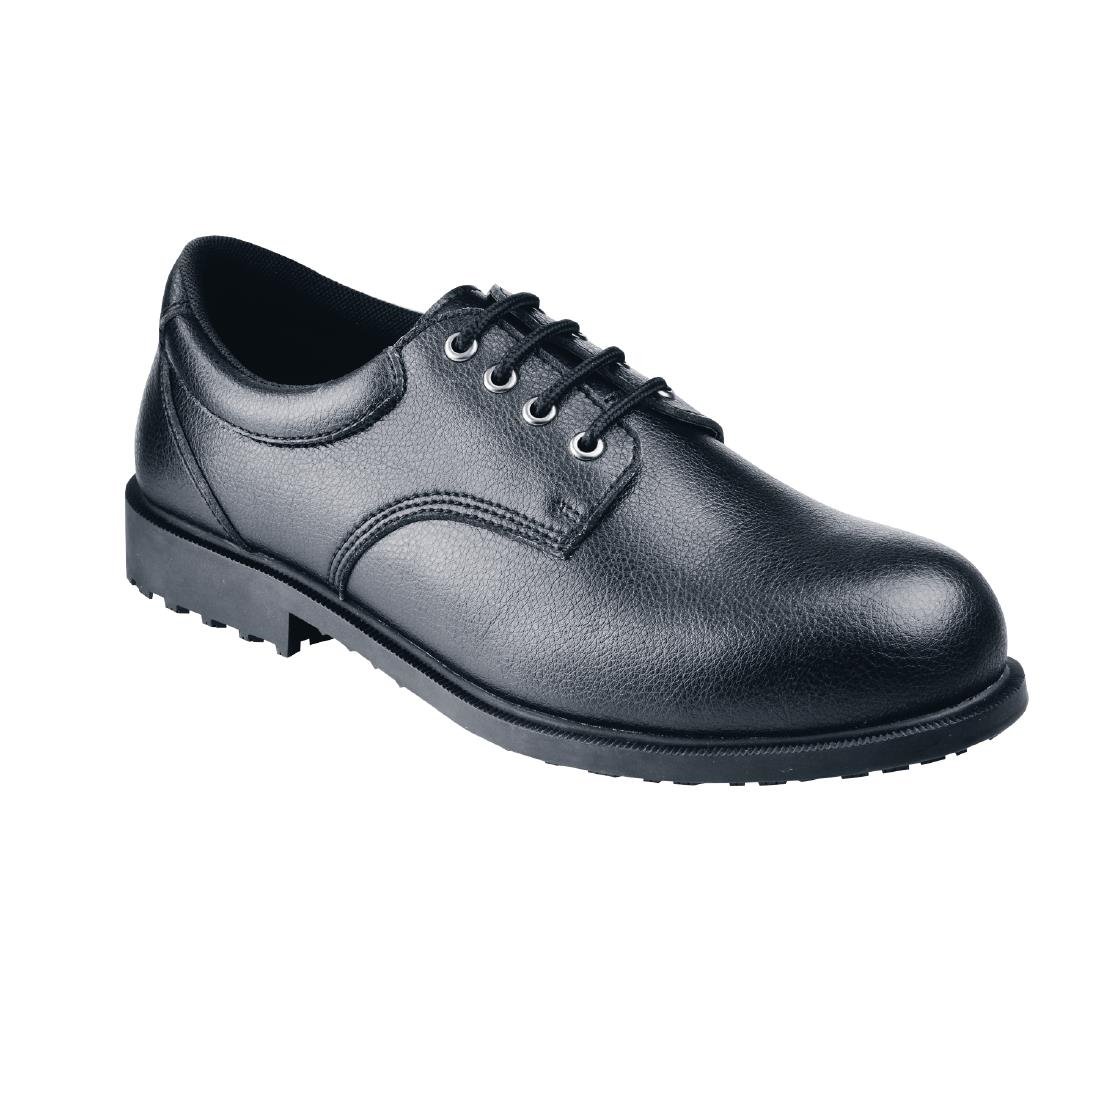 BB611-46 Shoes for Crews Cambridge Steel Toe Dress Shoe Size 46